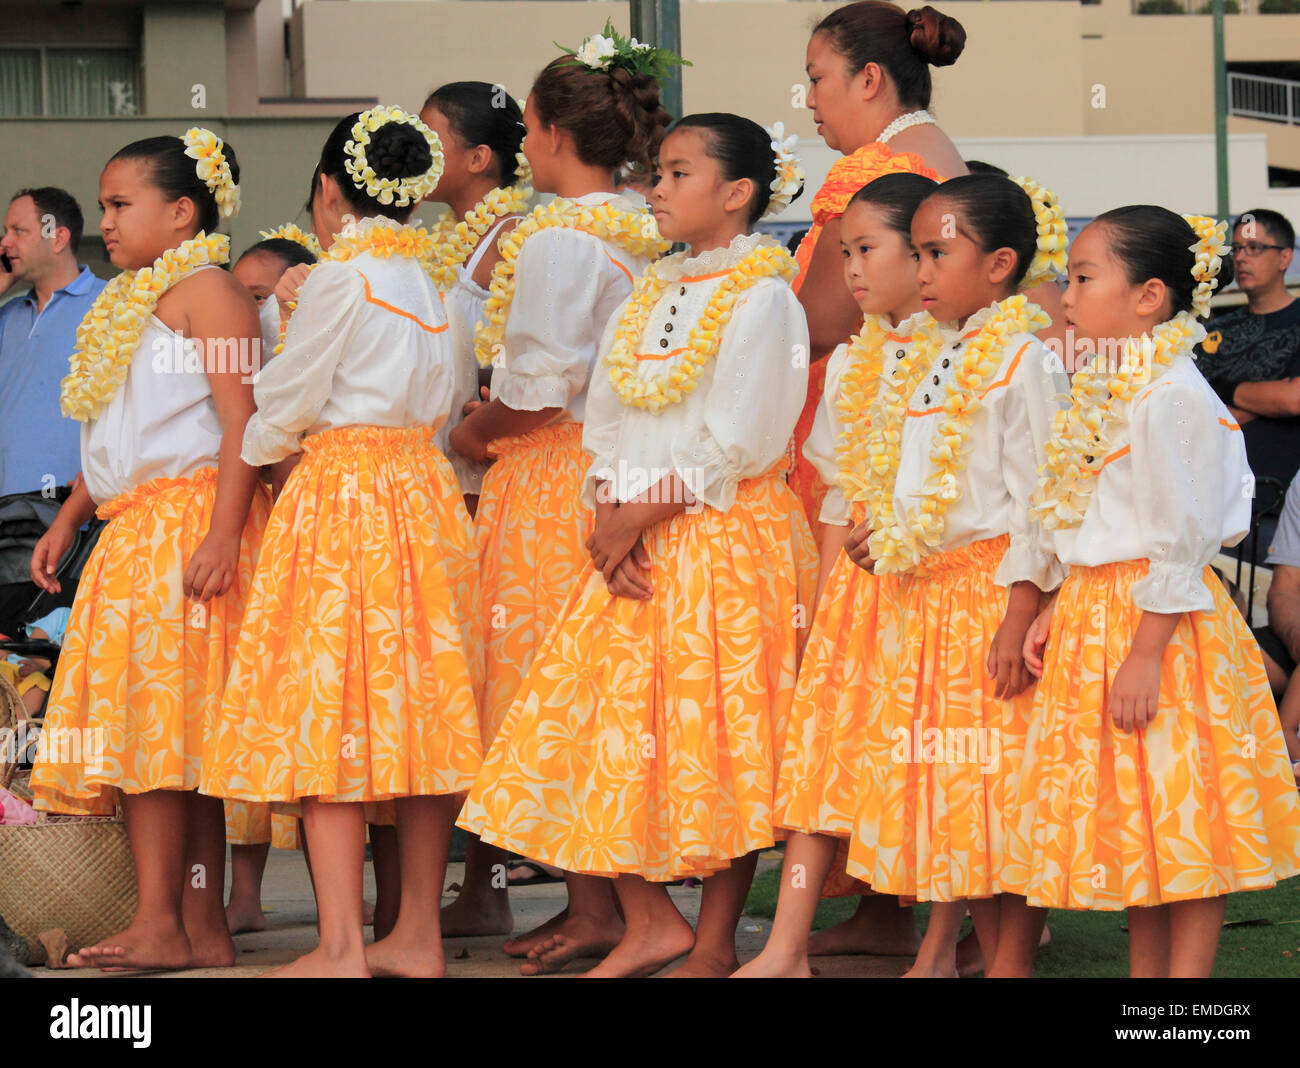 Hawaii, Oahu, Waikiki, young girls, traditional dress Stock Photo - Alamy